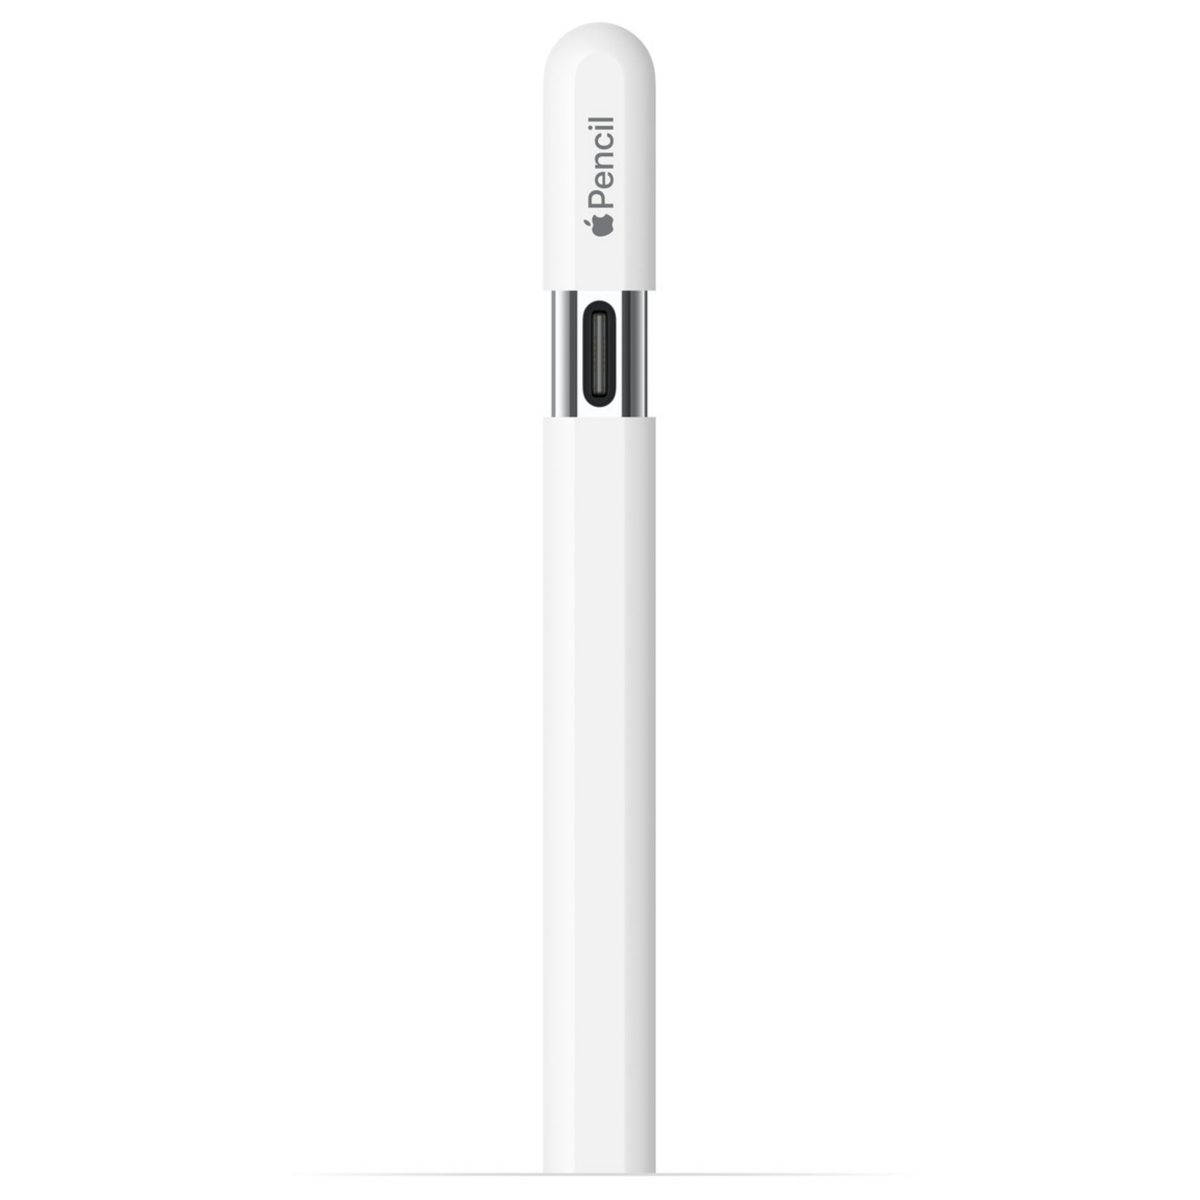 Apple Pencil USB-C, White, MUWA3ZE/A